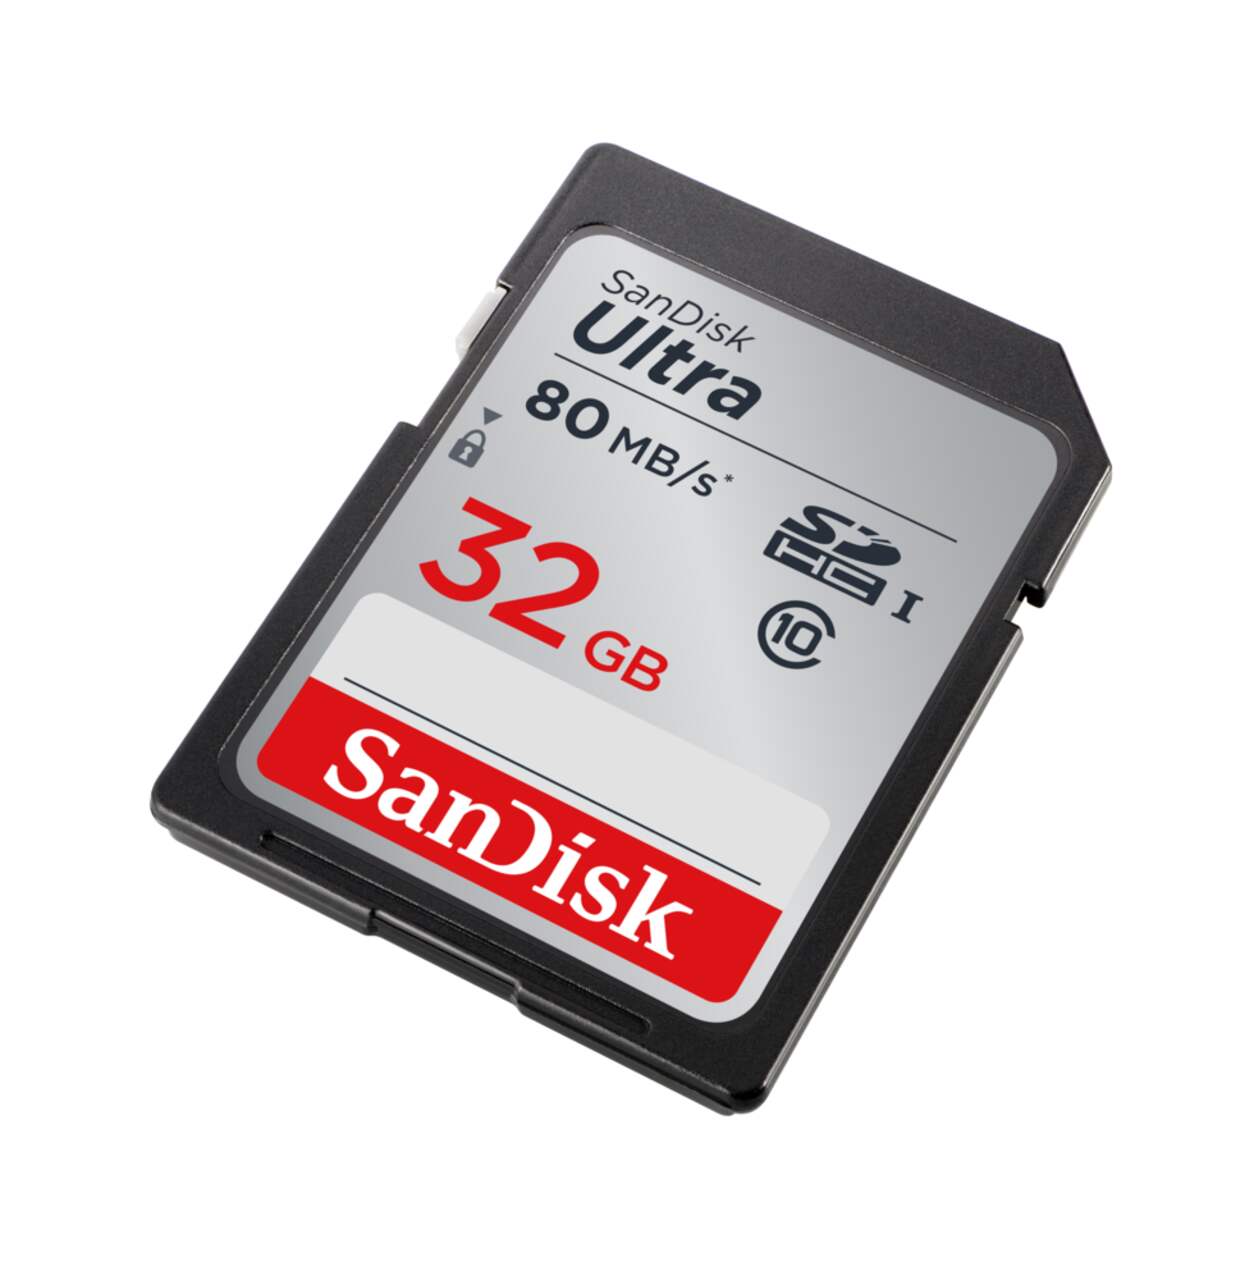 Une carte microSD de 1 500 Go chez Sandisk